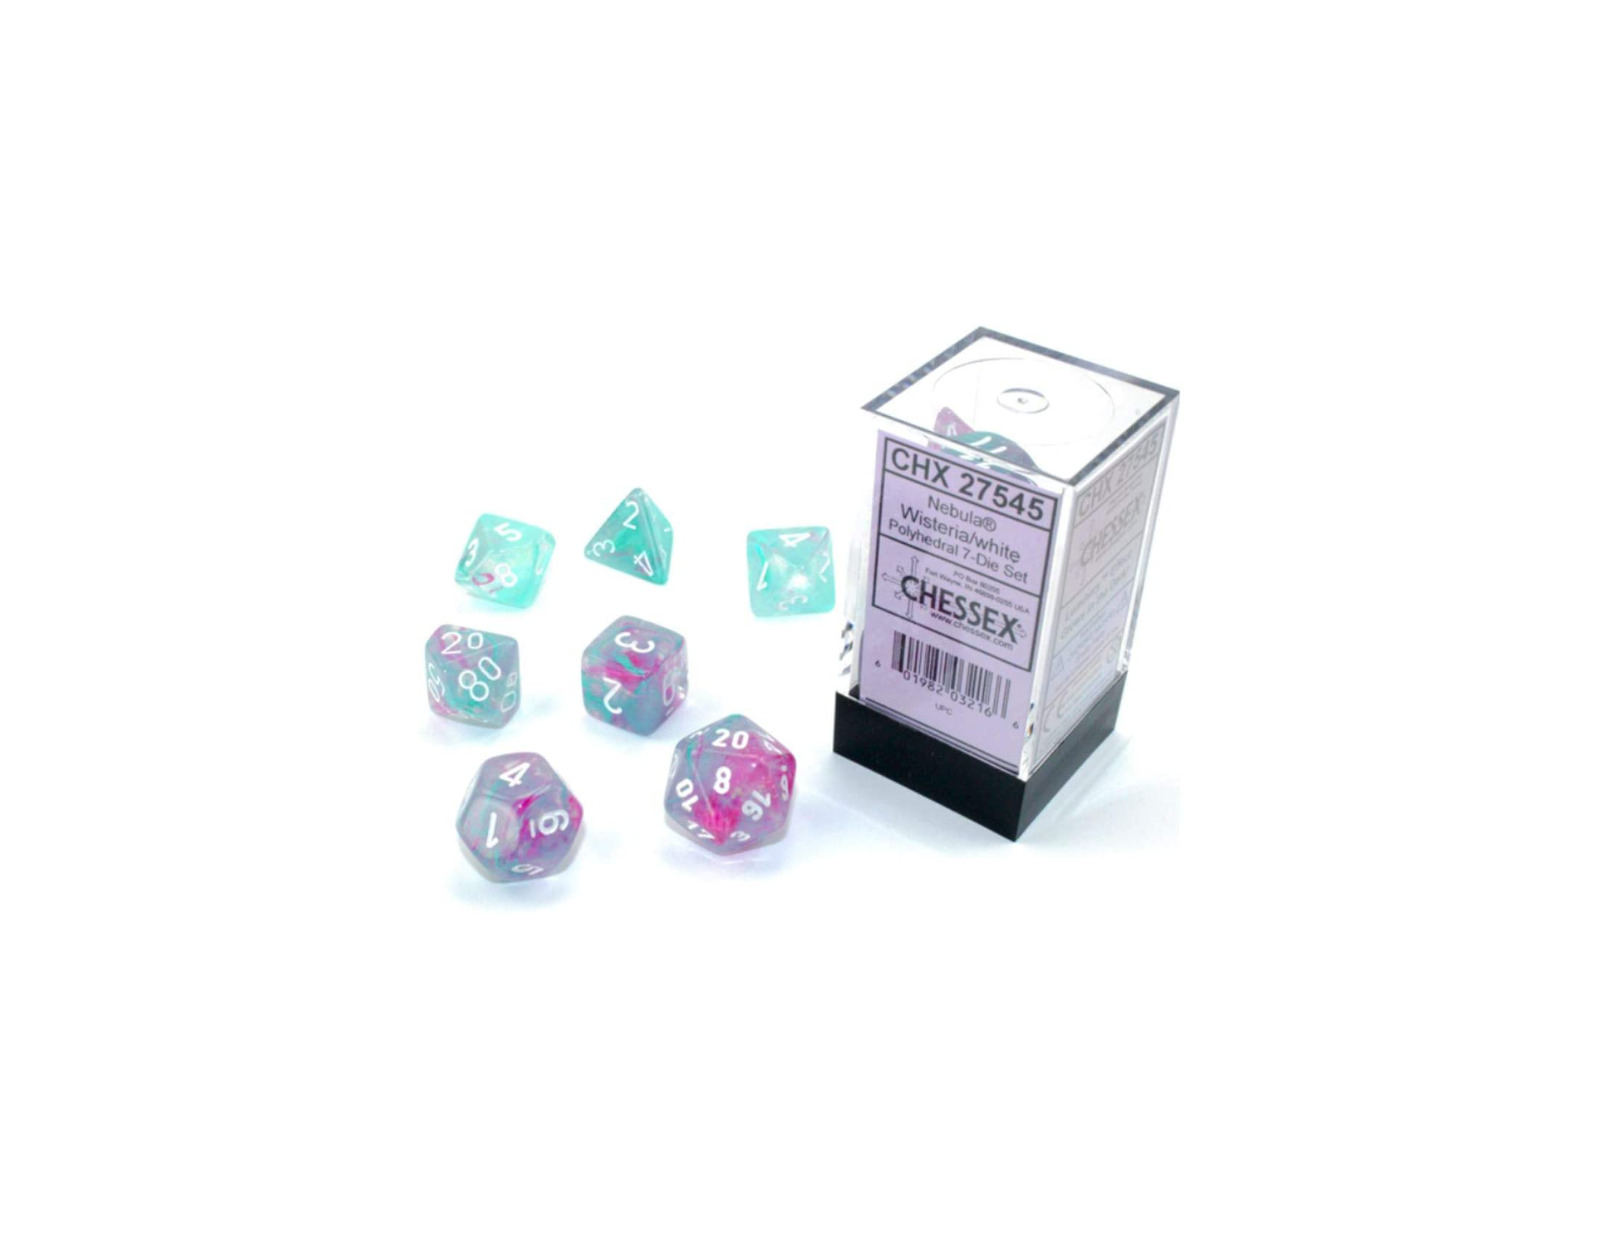 Chessex Nebula Polyhedral 7-Die Set (Wisteria/White) CHX27545 Luminary Effect